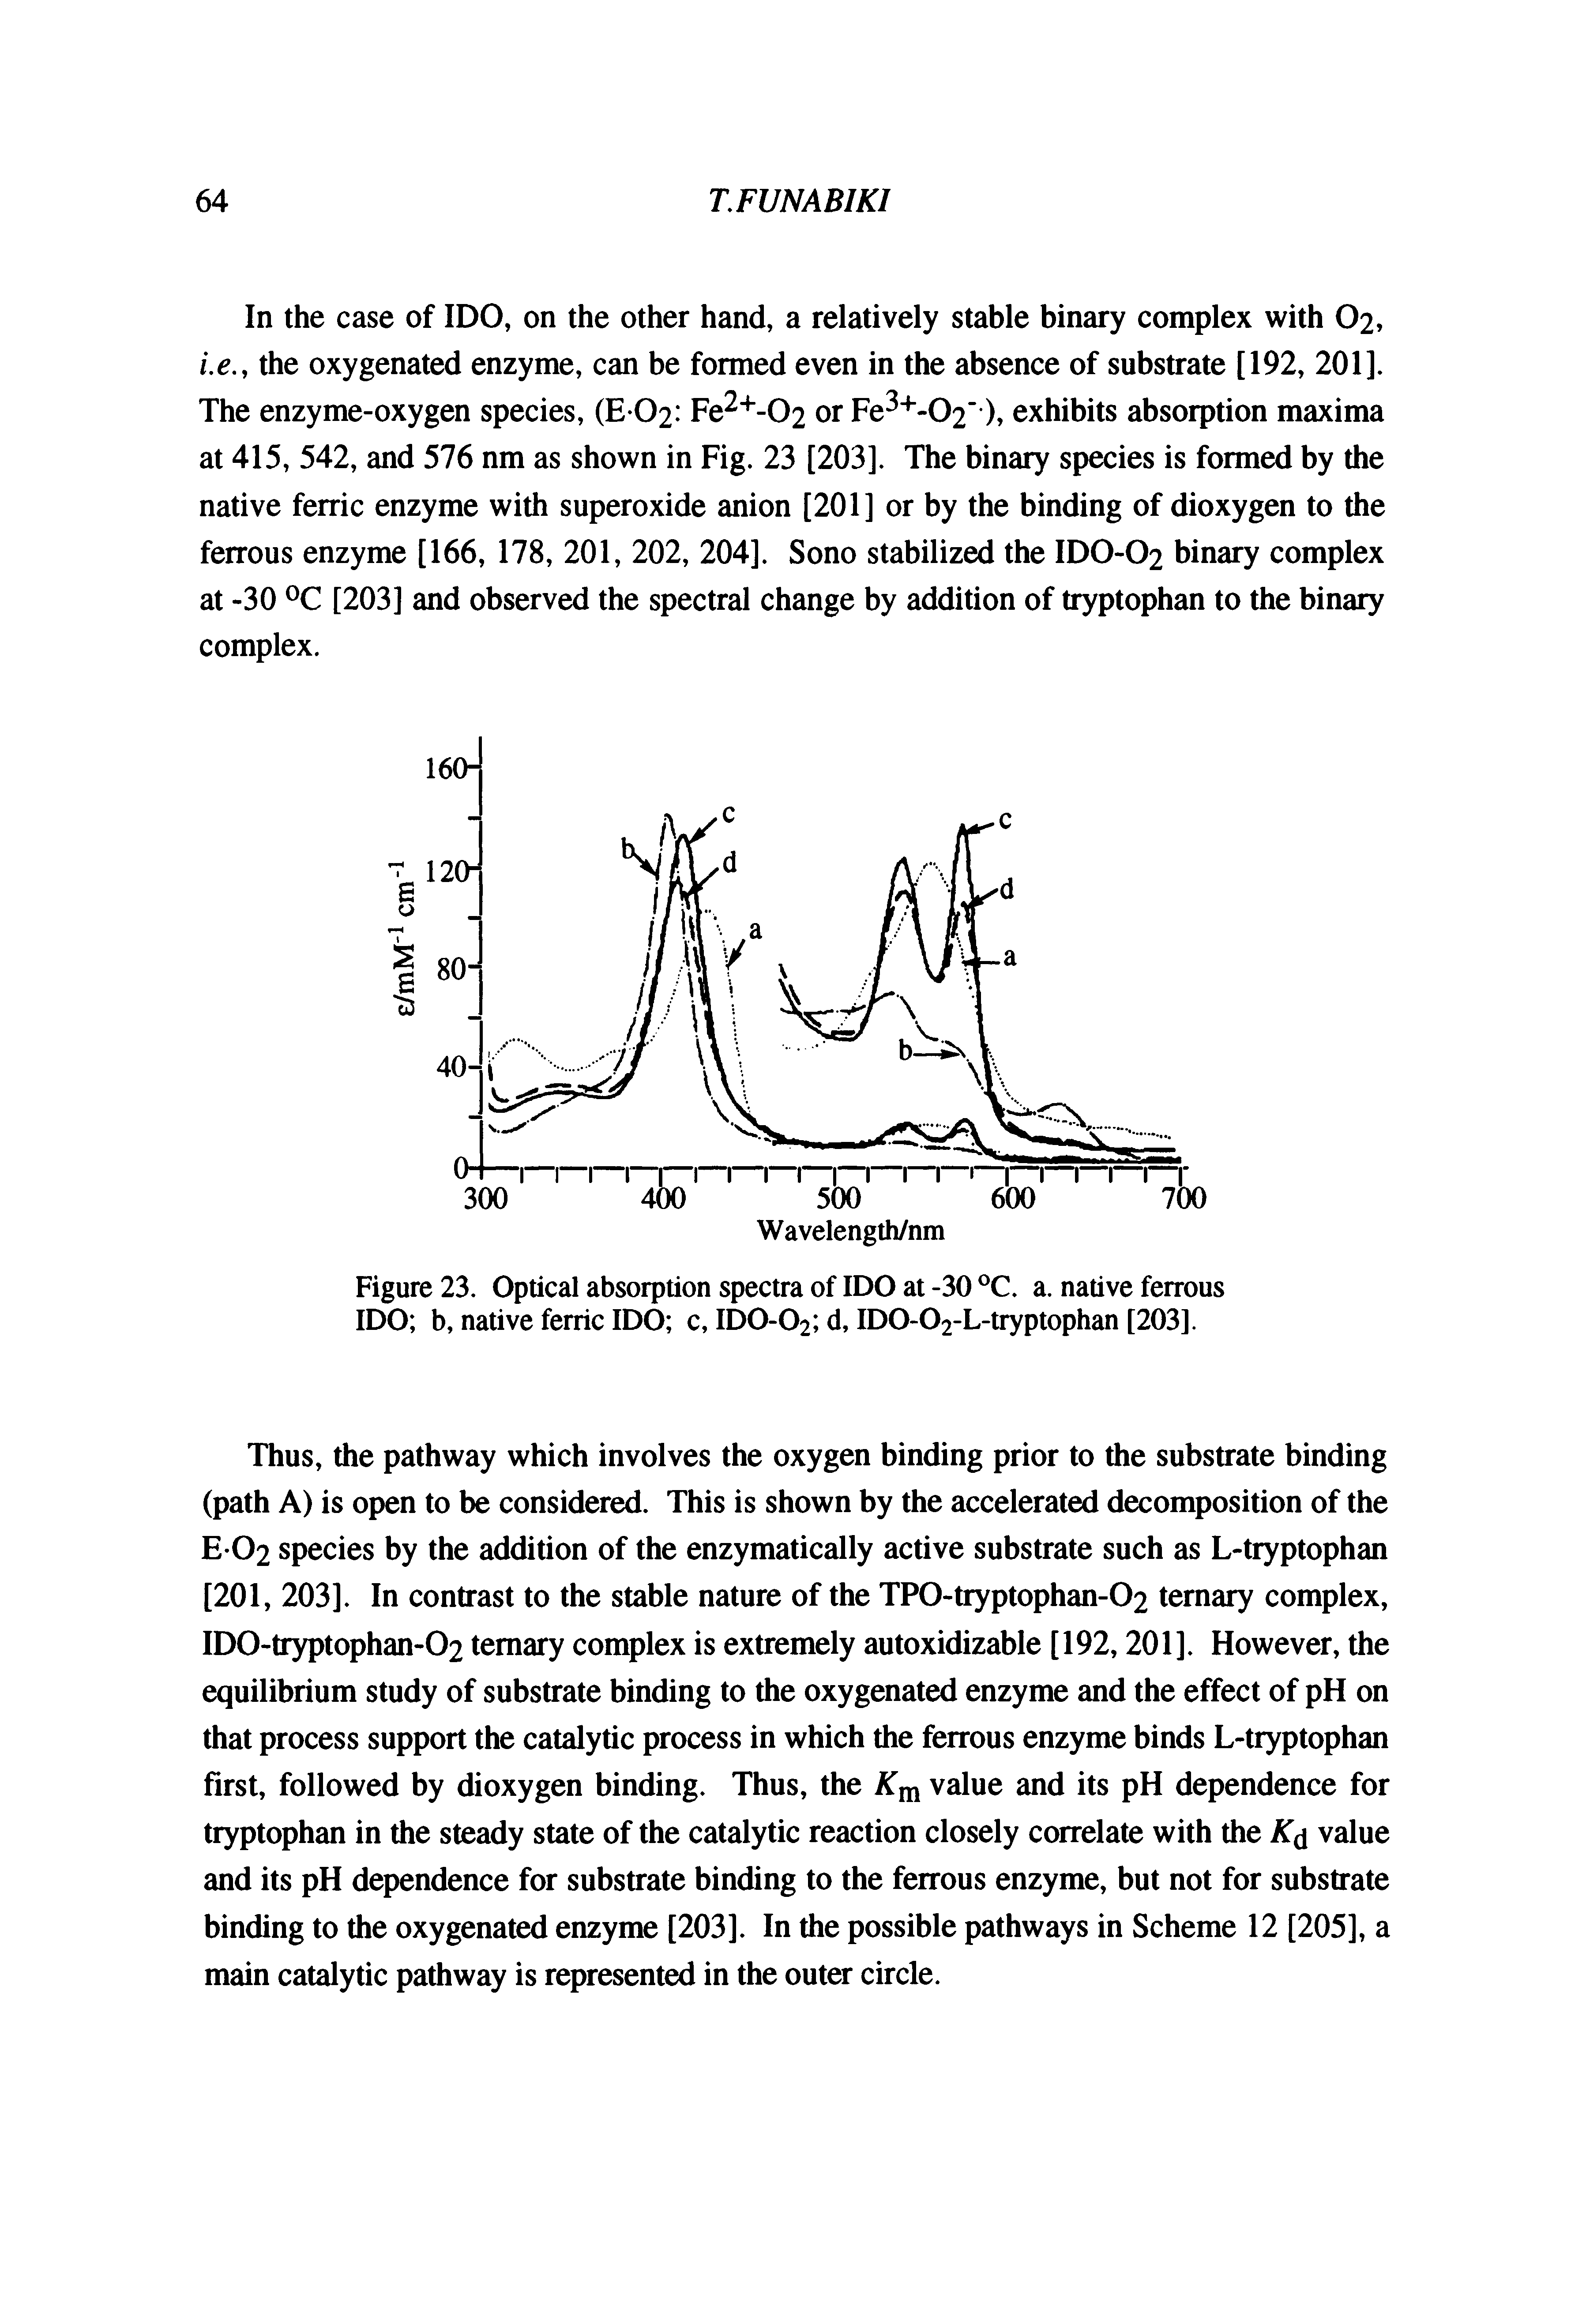 Figure 23. Optical absorption spectra of IDO at -30 C. a. native ferrous IDO b, native ferric IDO c, IDO-O2 1 IDO-02-L-tryptophan [203].